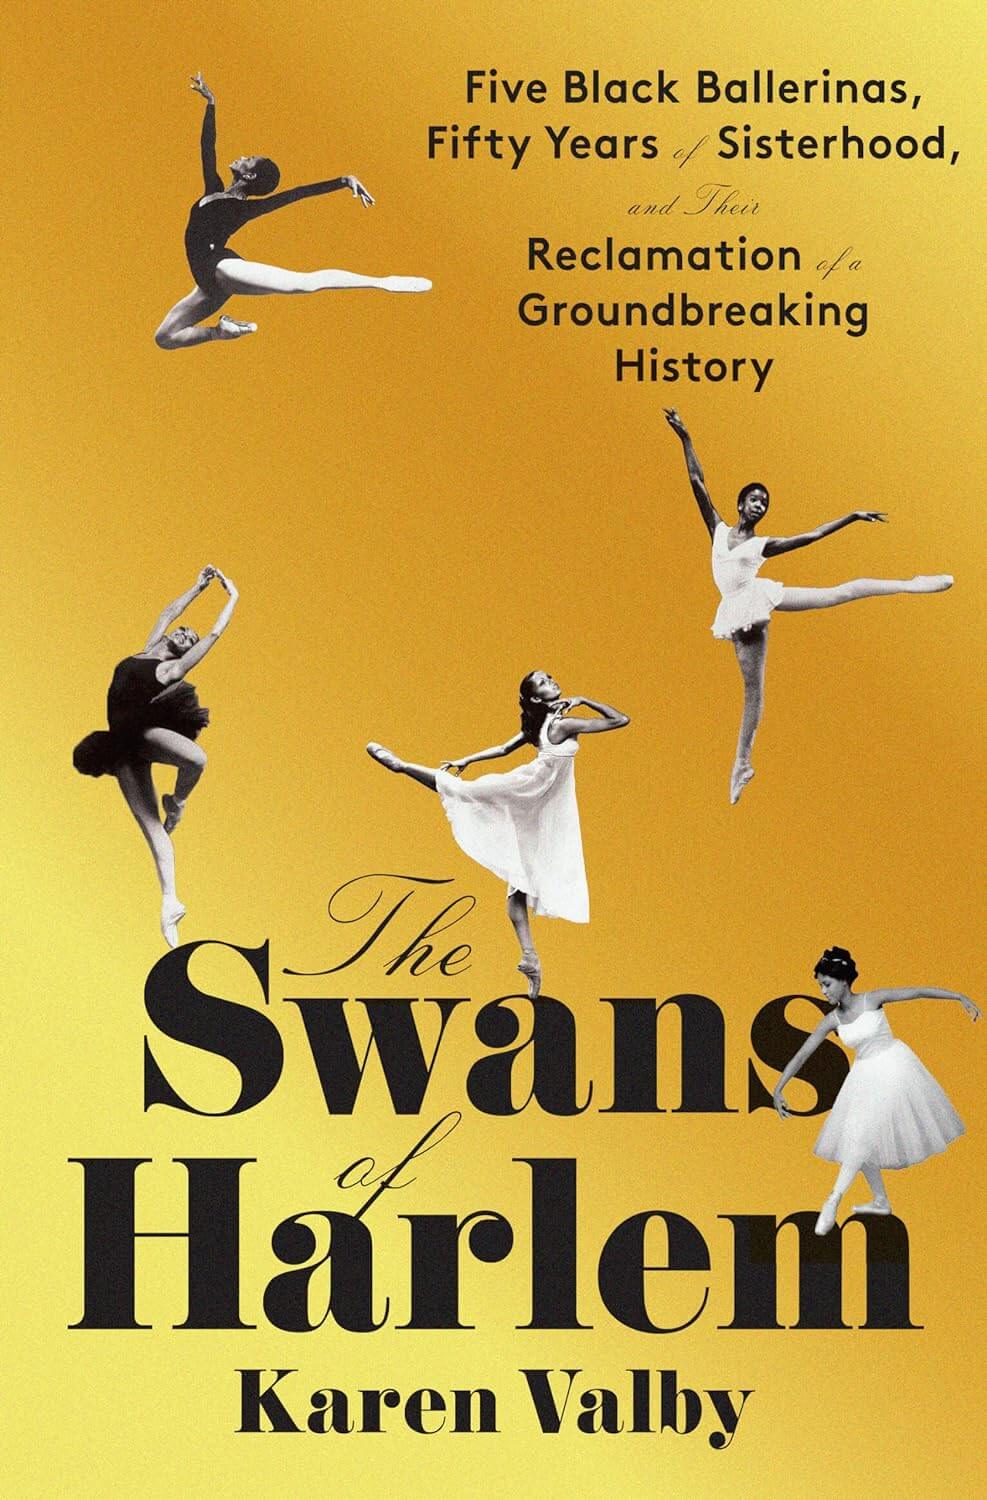 Swans of Harlem